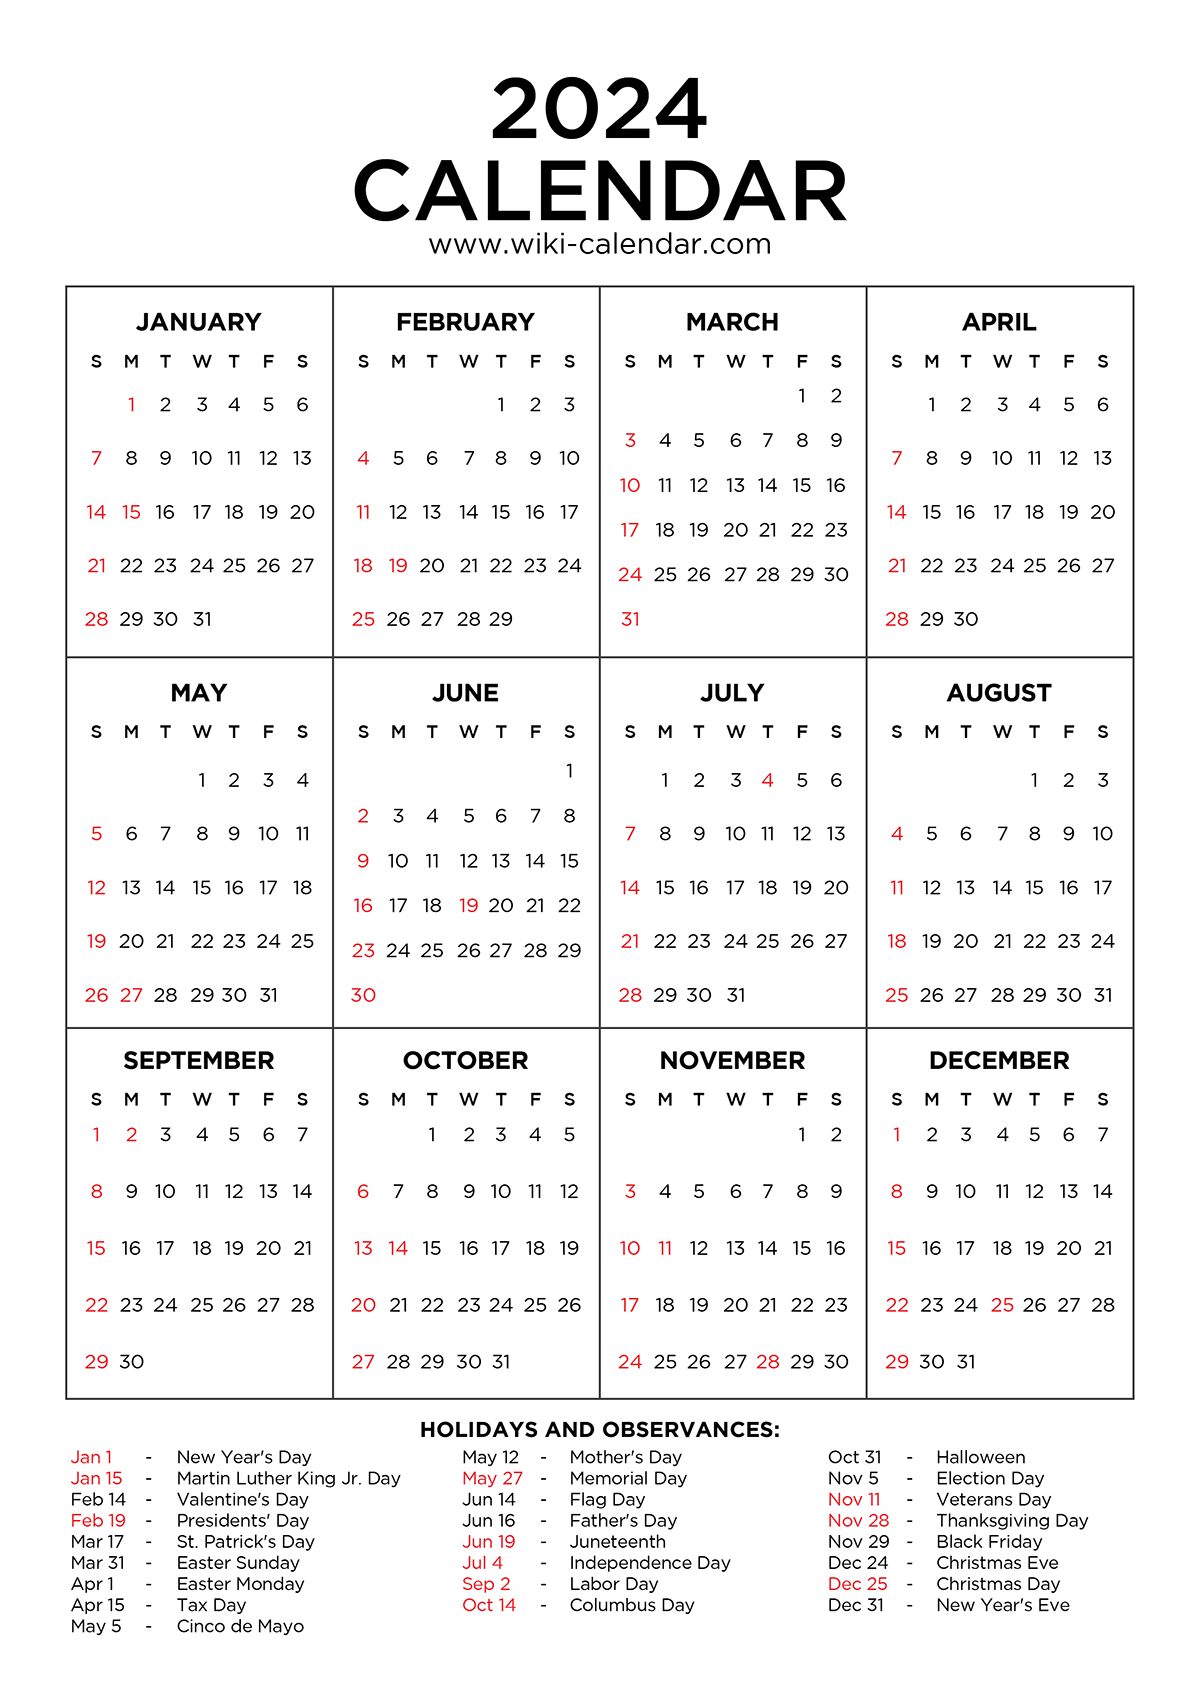 Year 2024 Calendar Printable With Holidays - Wiki Calendar | 2024 Yearly Calendar Free